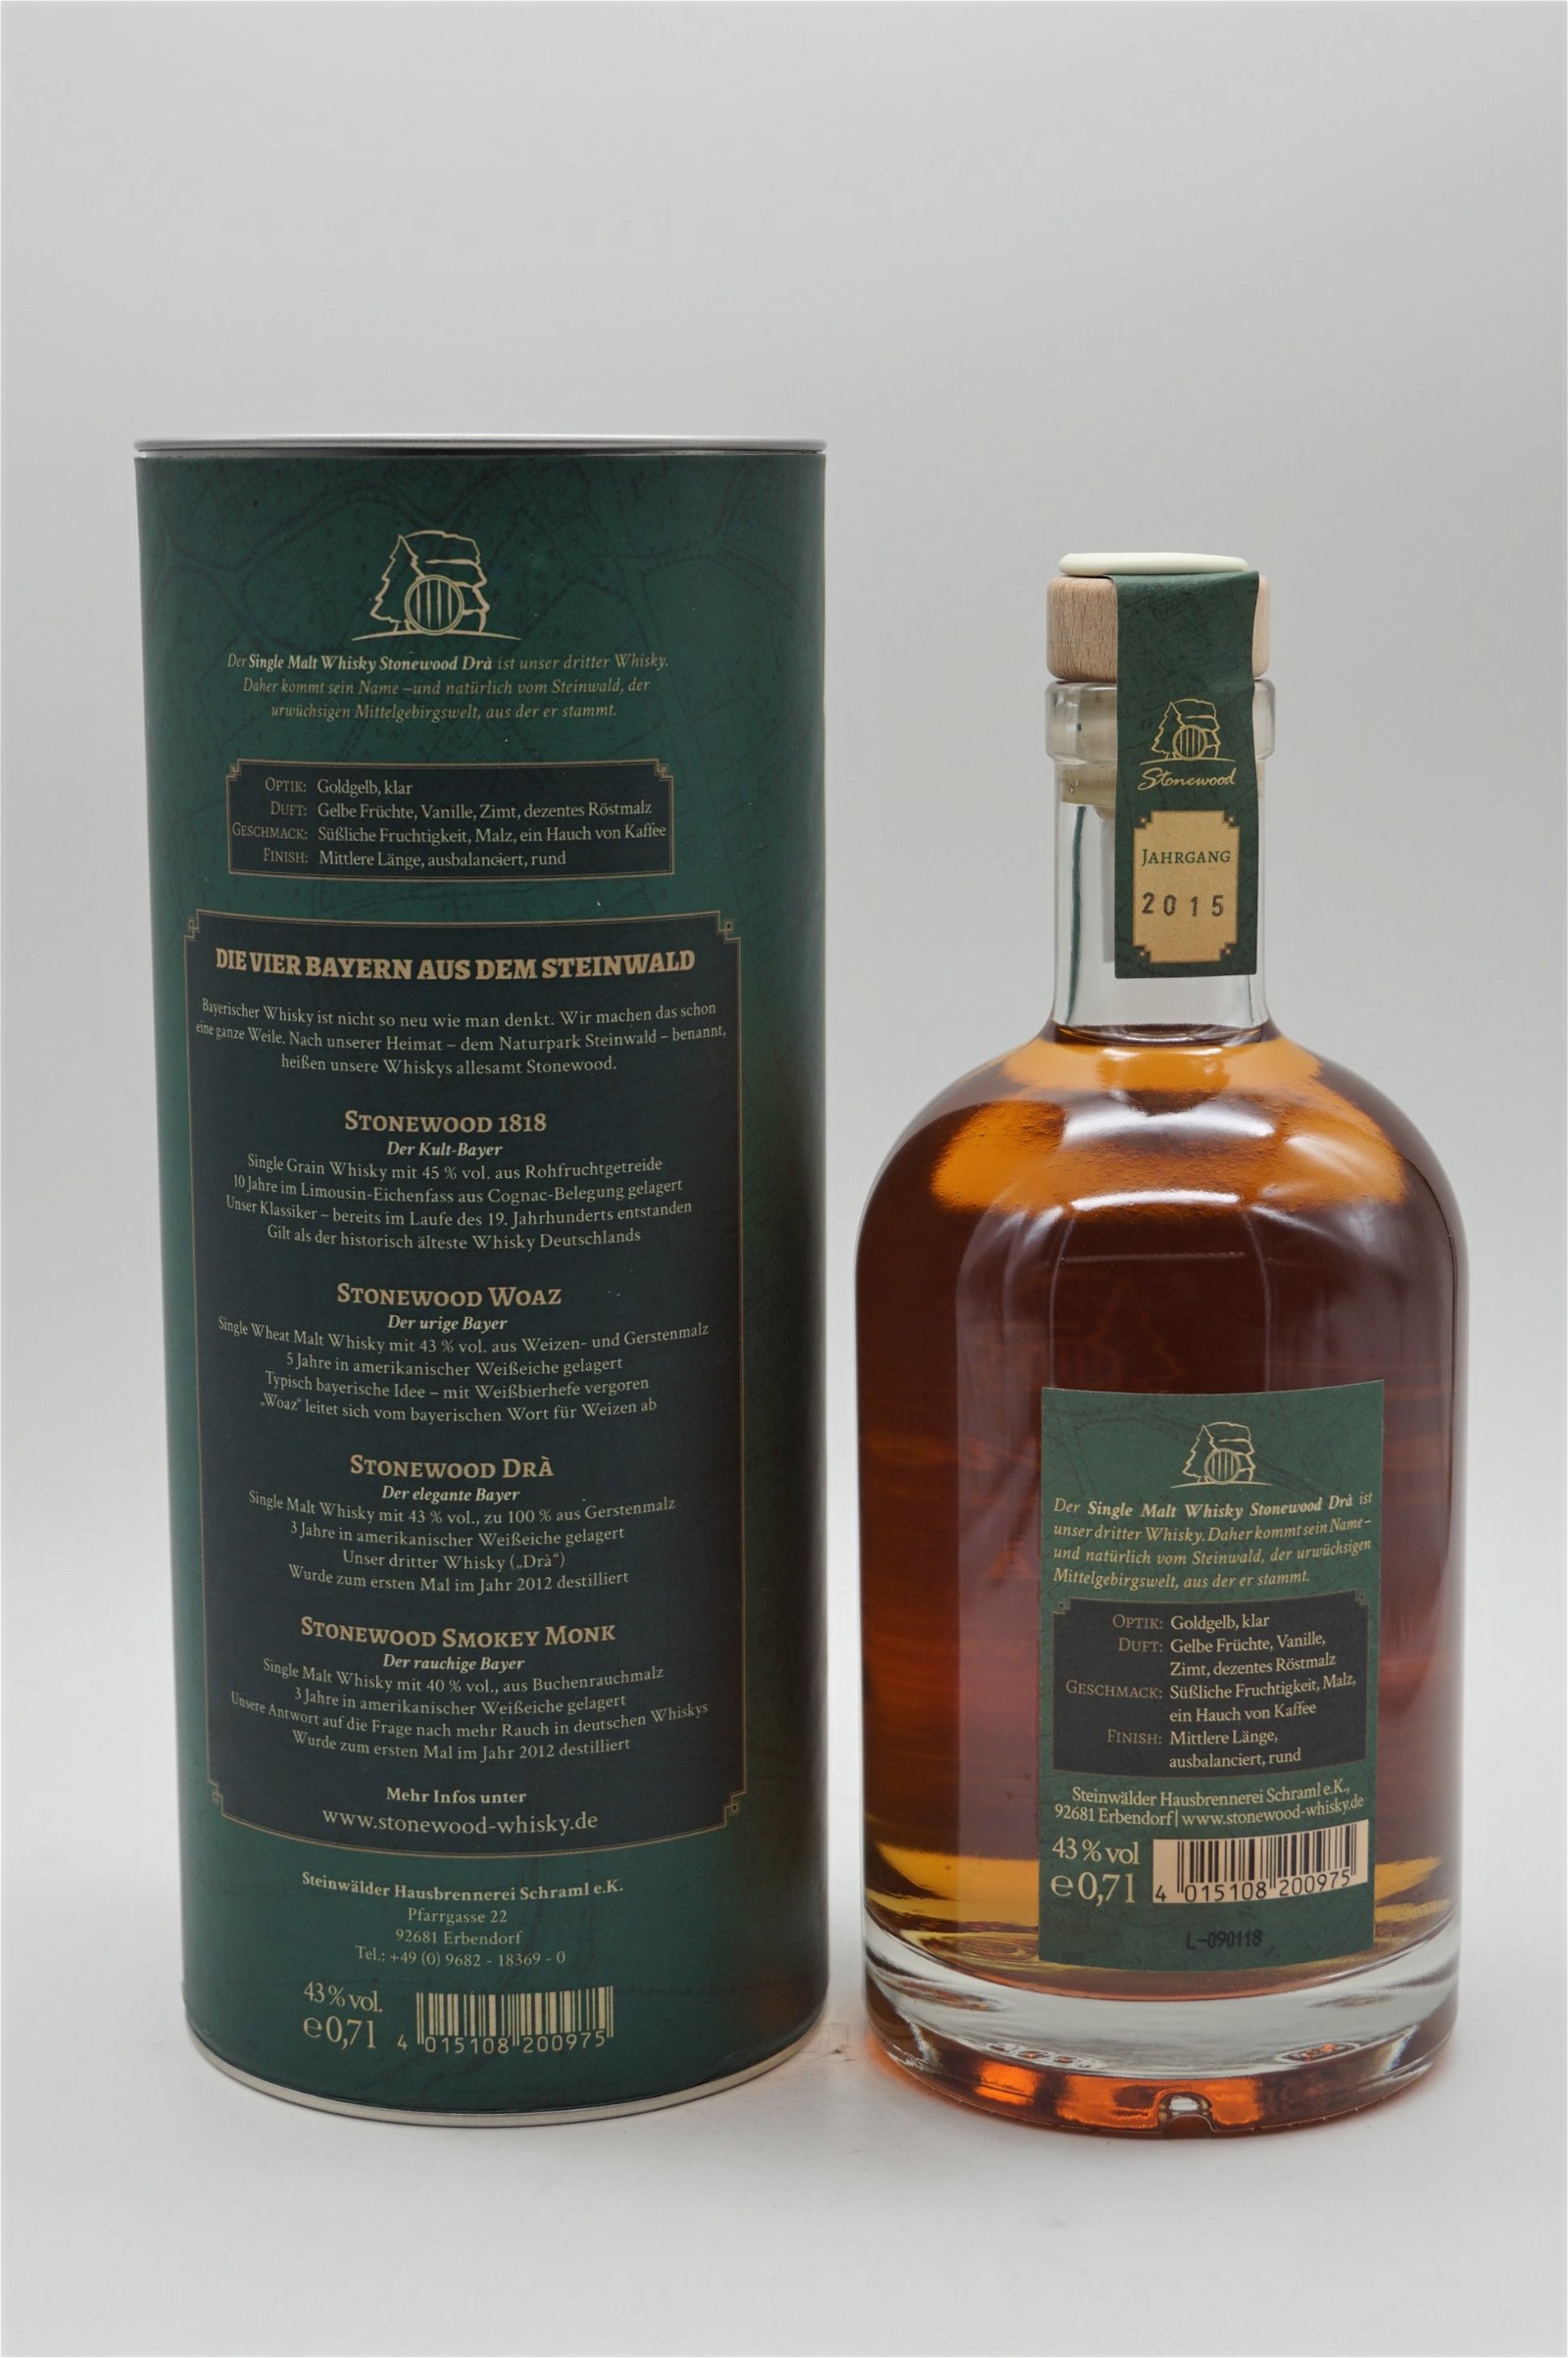 Schraml Stonewood Dra Bavarian Single Malt Whisky